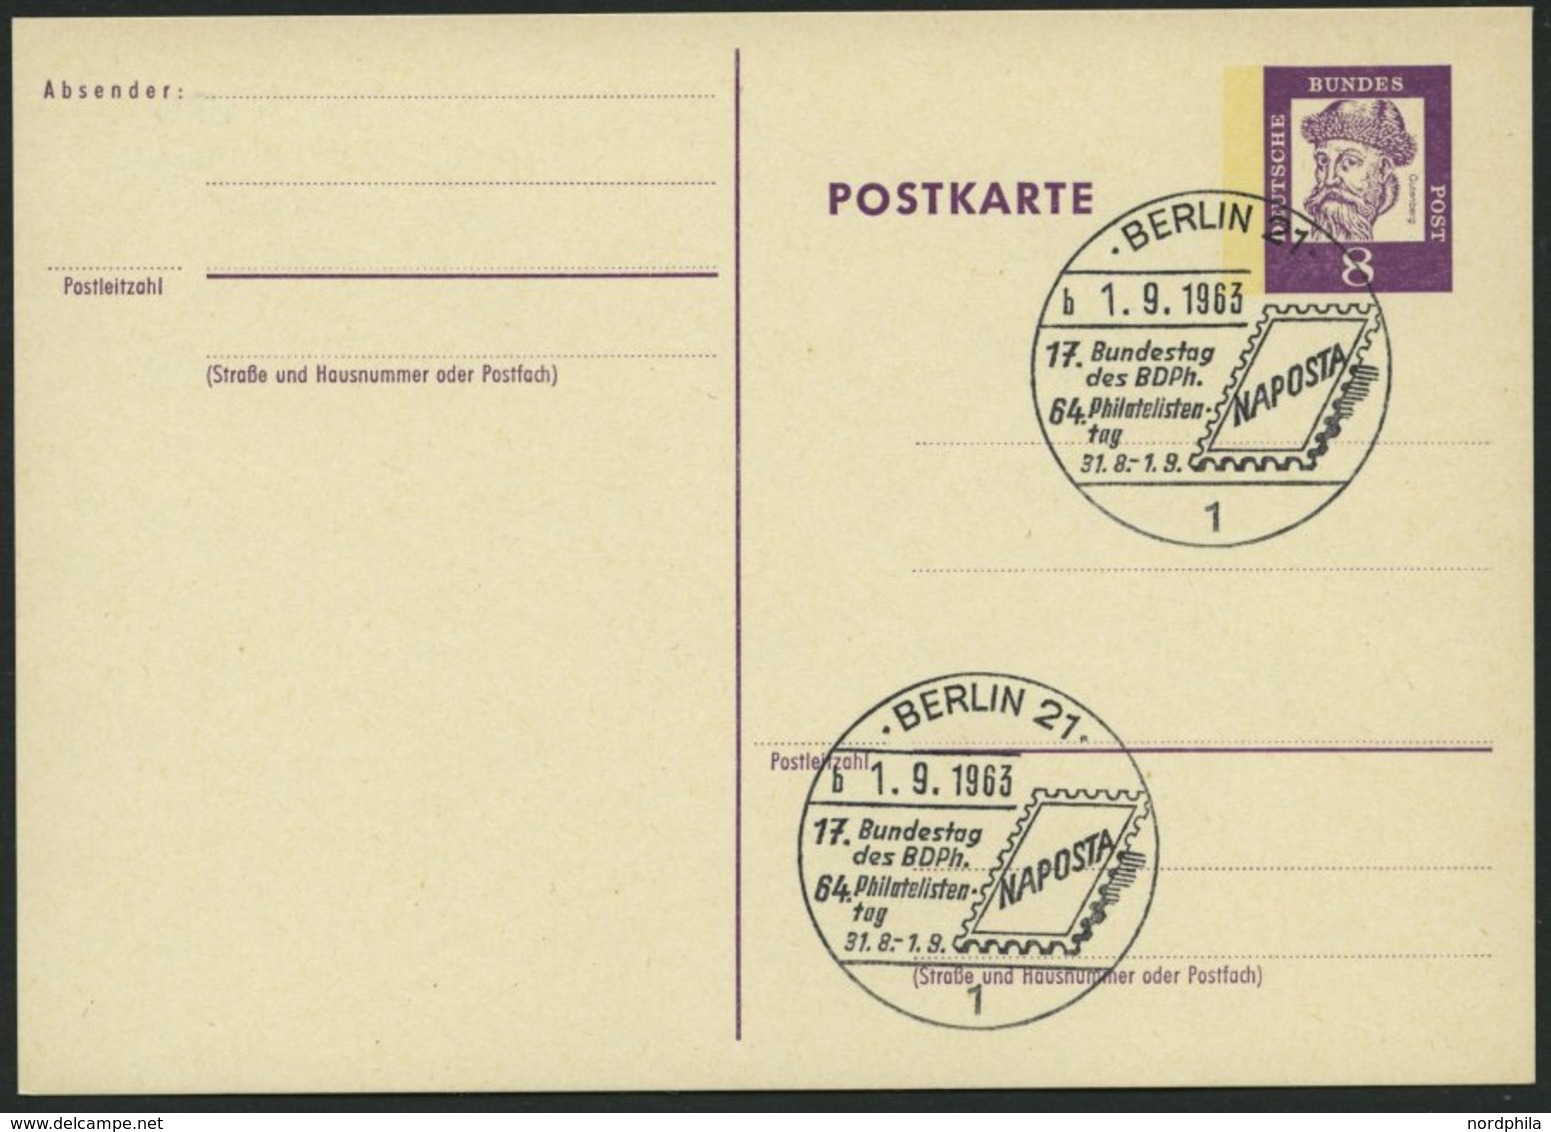 GANZSACHEN P 73 BRIEF, 1962, 8 Pf. Gutenberg, Postkarte In Grotesk-Schrift, Leer Gestempelt Mit Sonderstempel BERLIN 21  - Colecciones